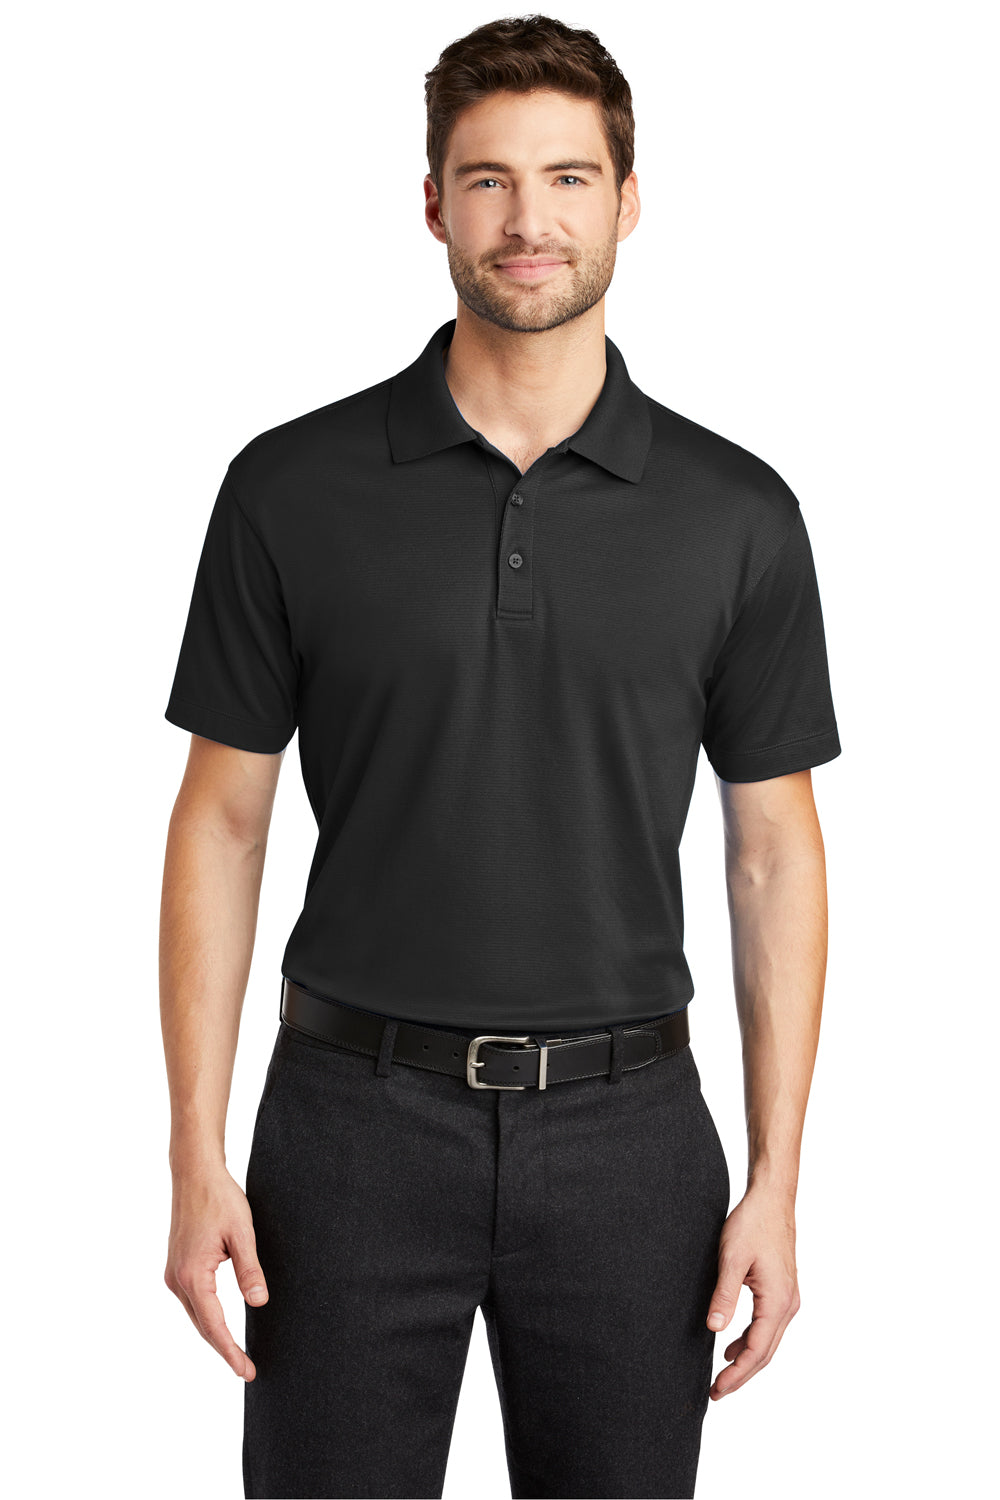 Port Authority K573 Mens Rapid Dry Moisture Wicking Short Sleeve Polo Shirt Black Front